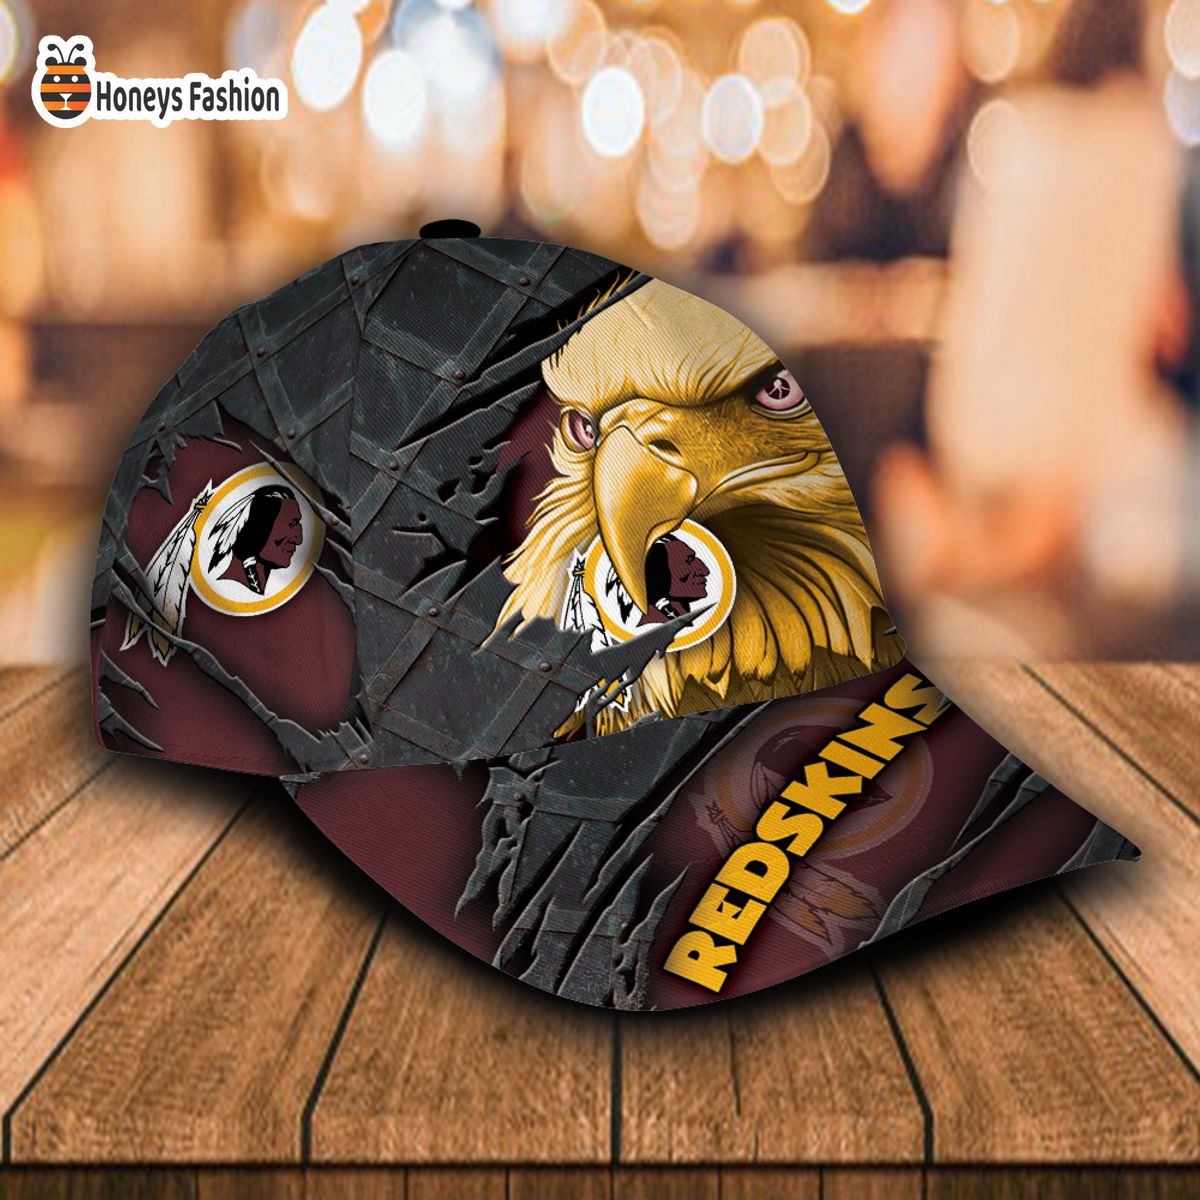 Washington Redskins NFL Eagle Custom Name Classic Cap